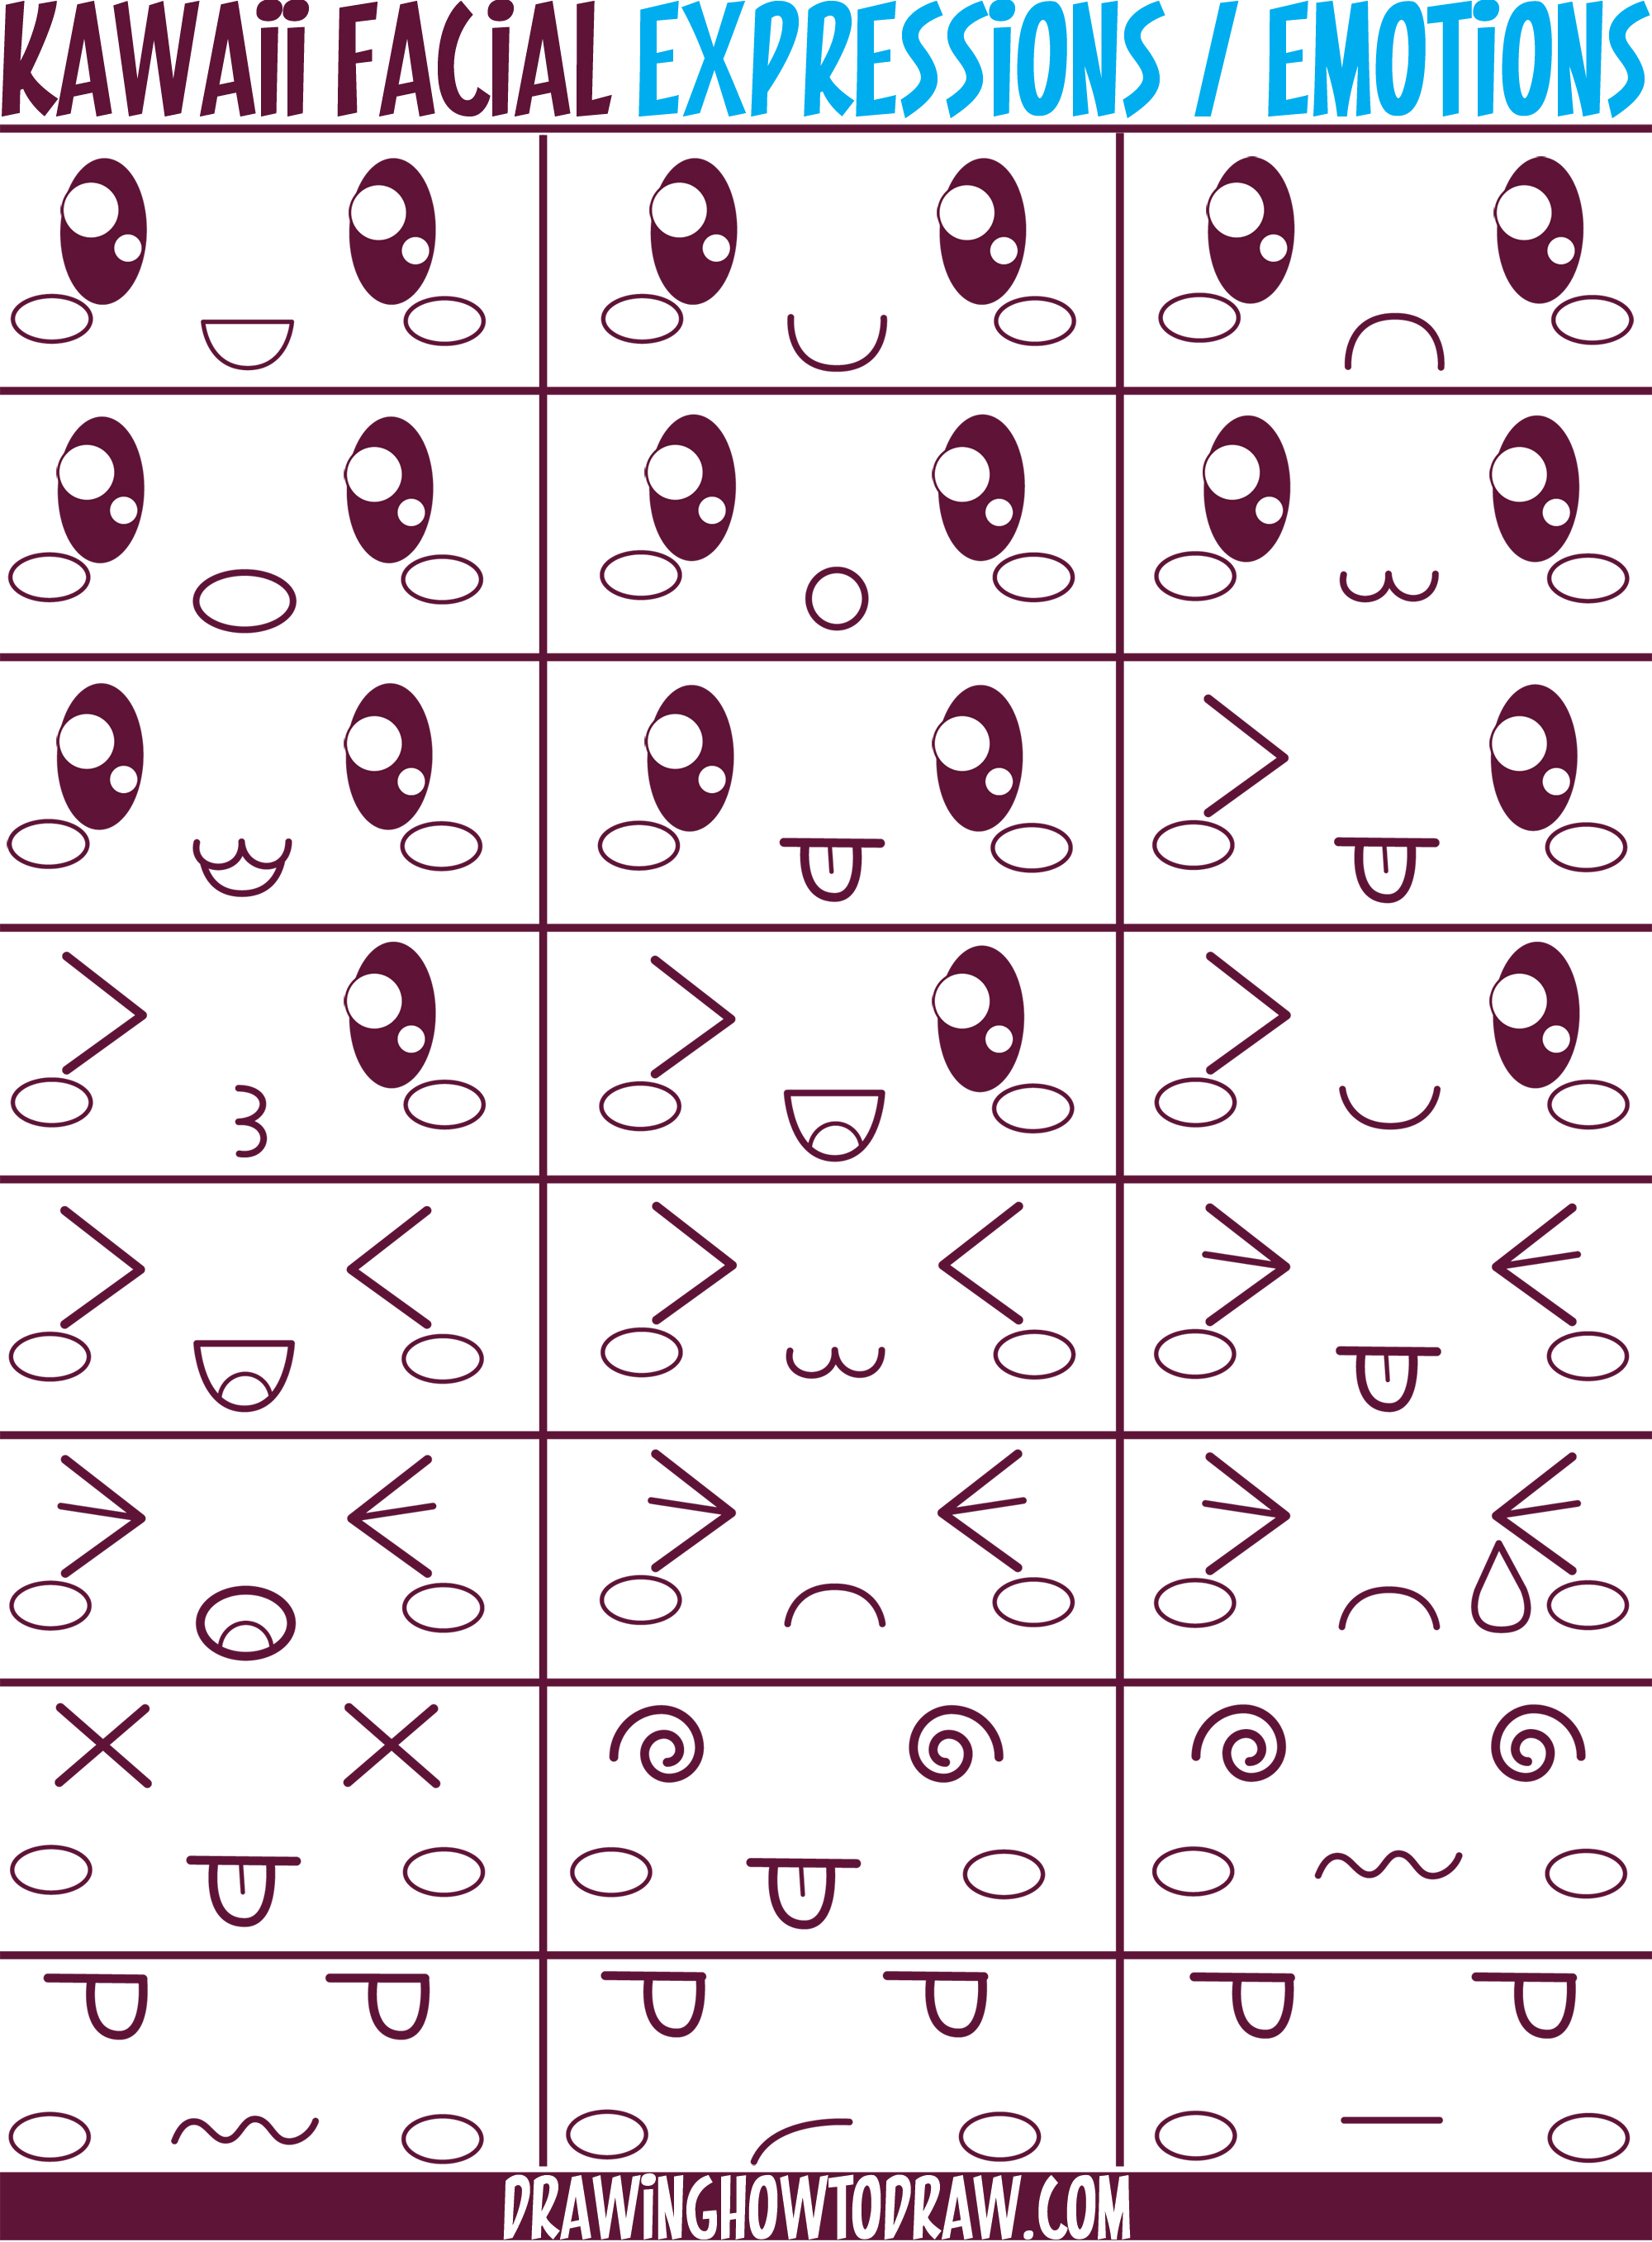 Facial Expression Guide 81